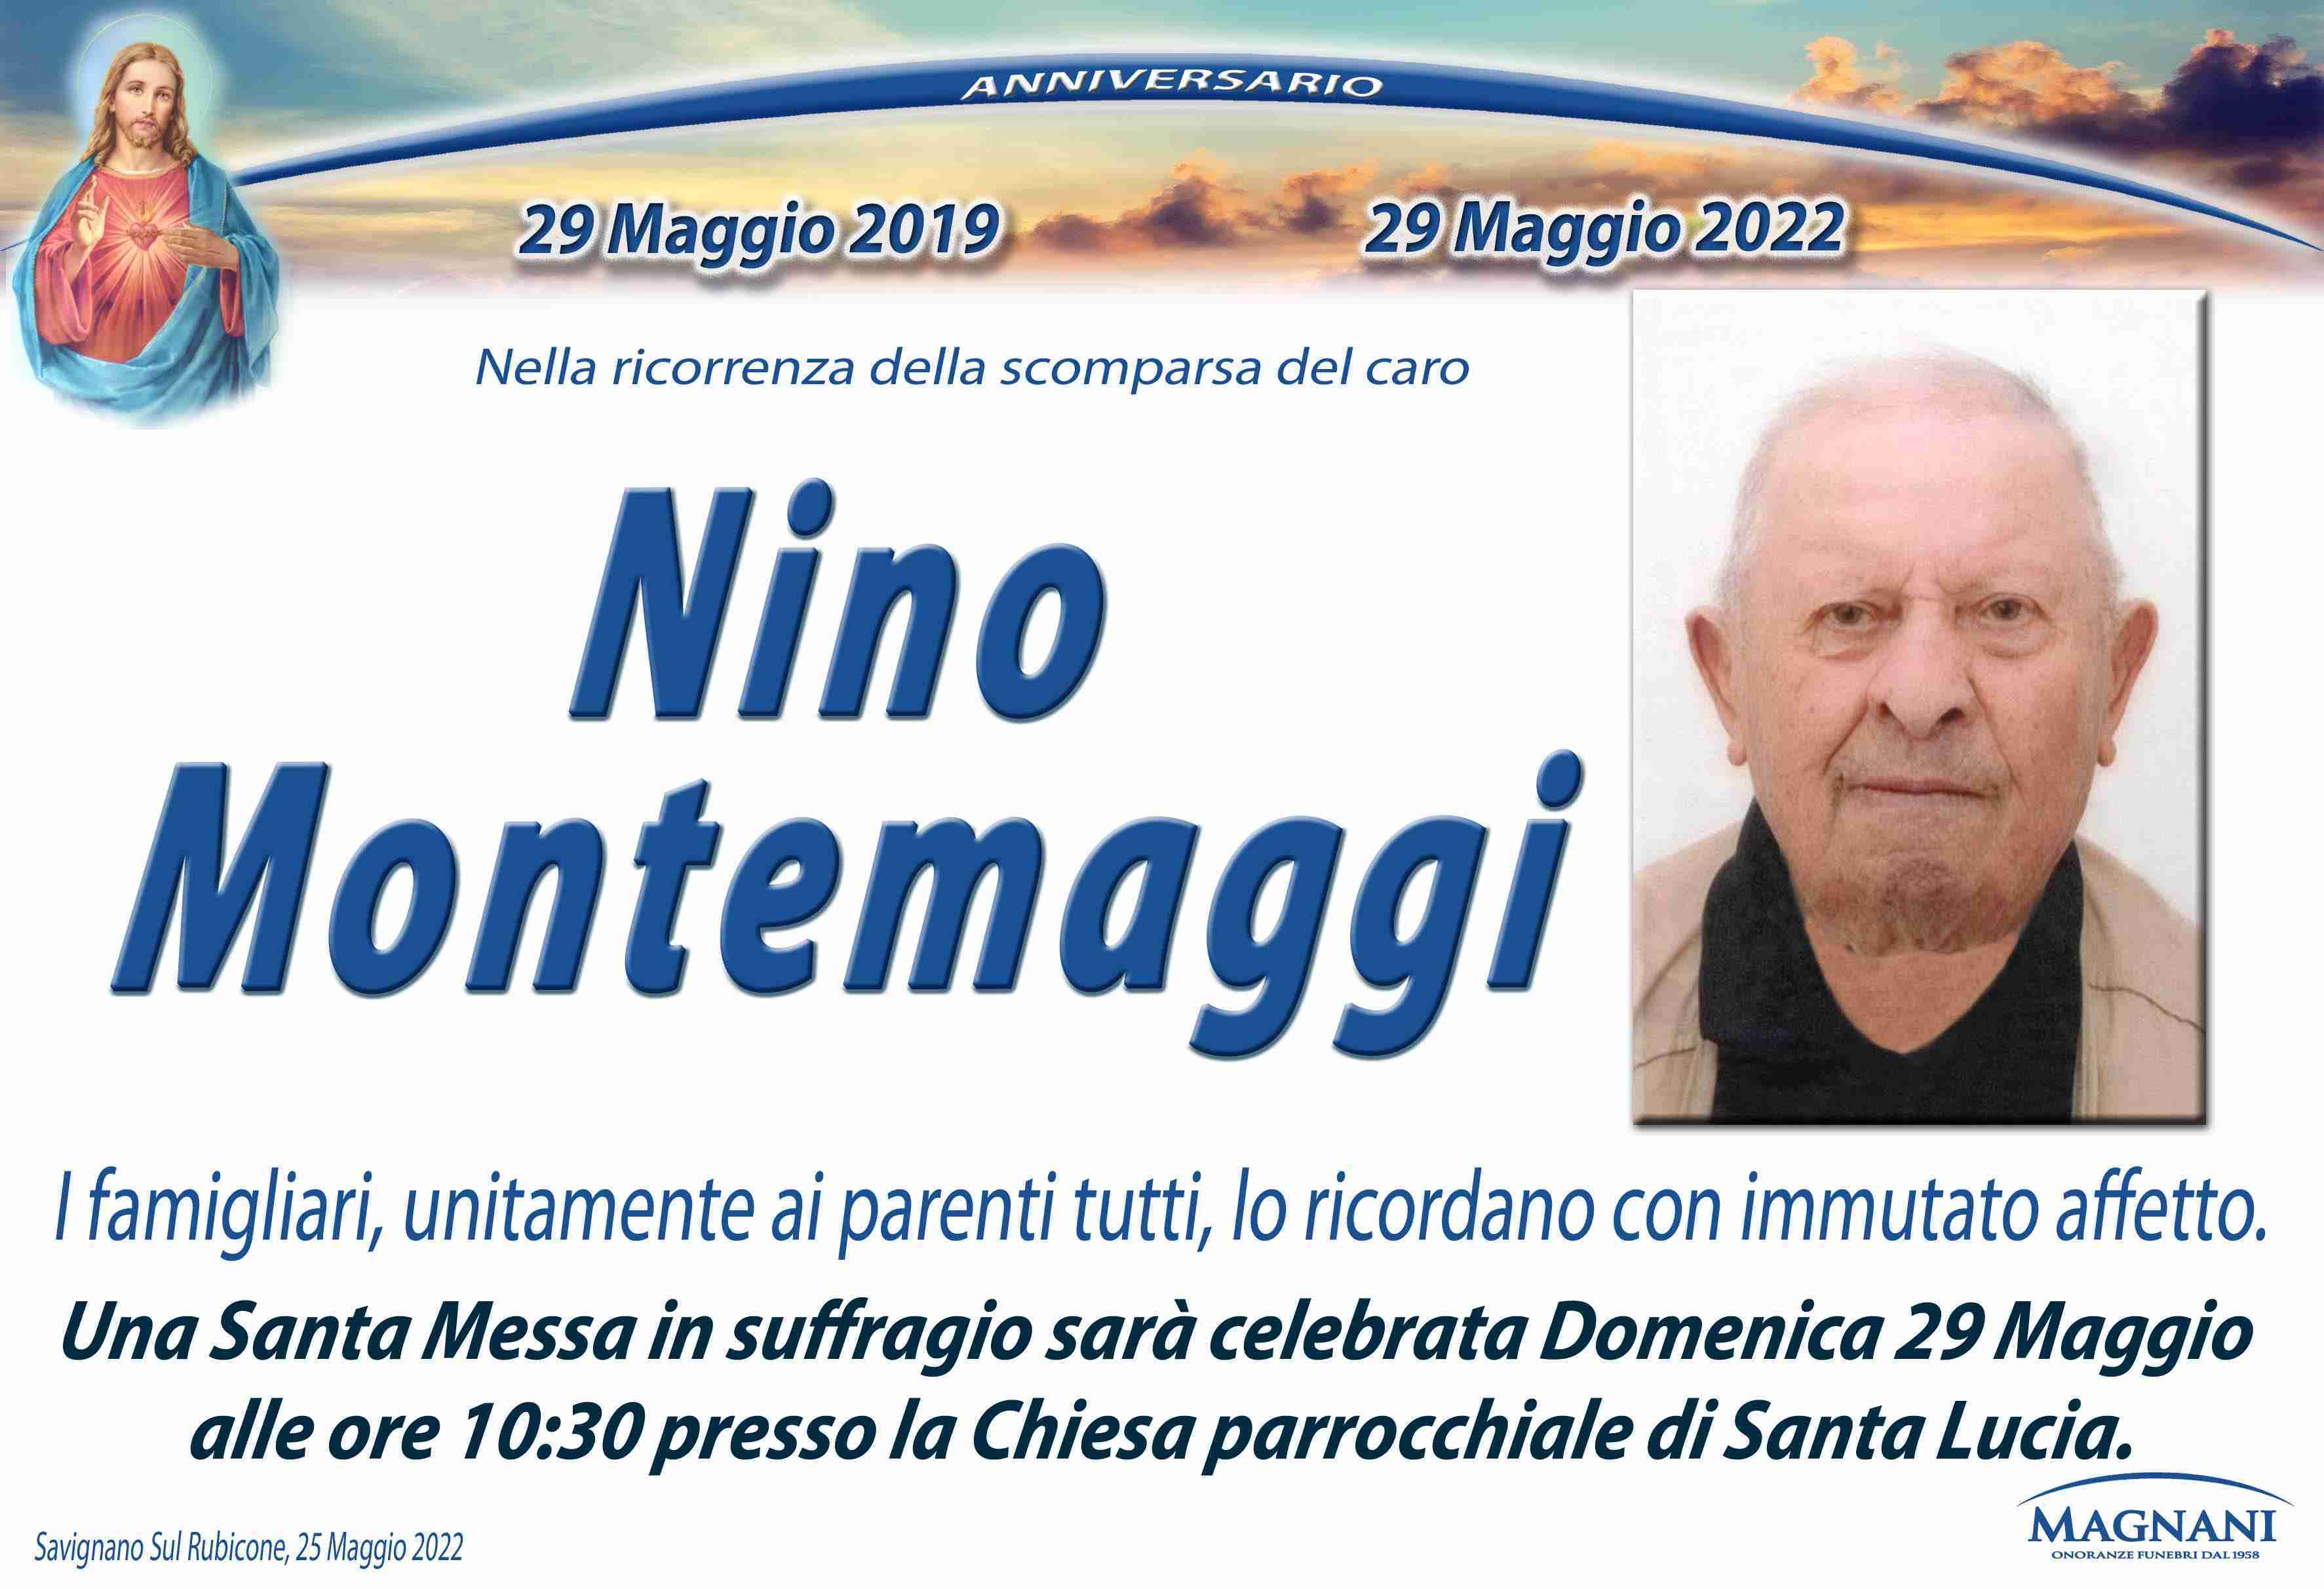 Nino Montemaggi